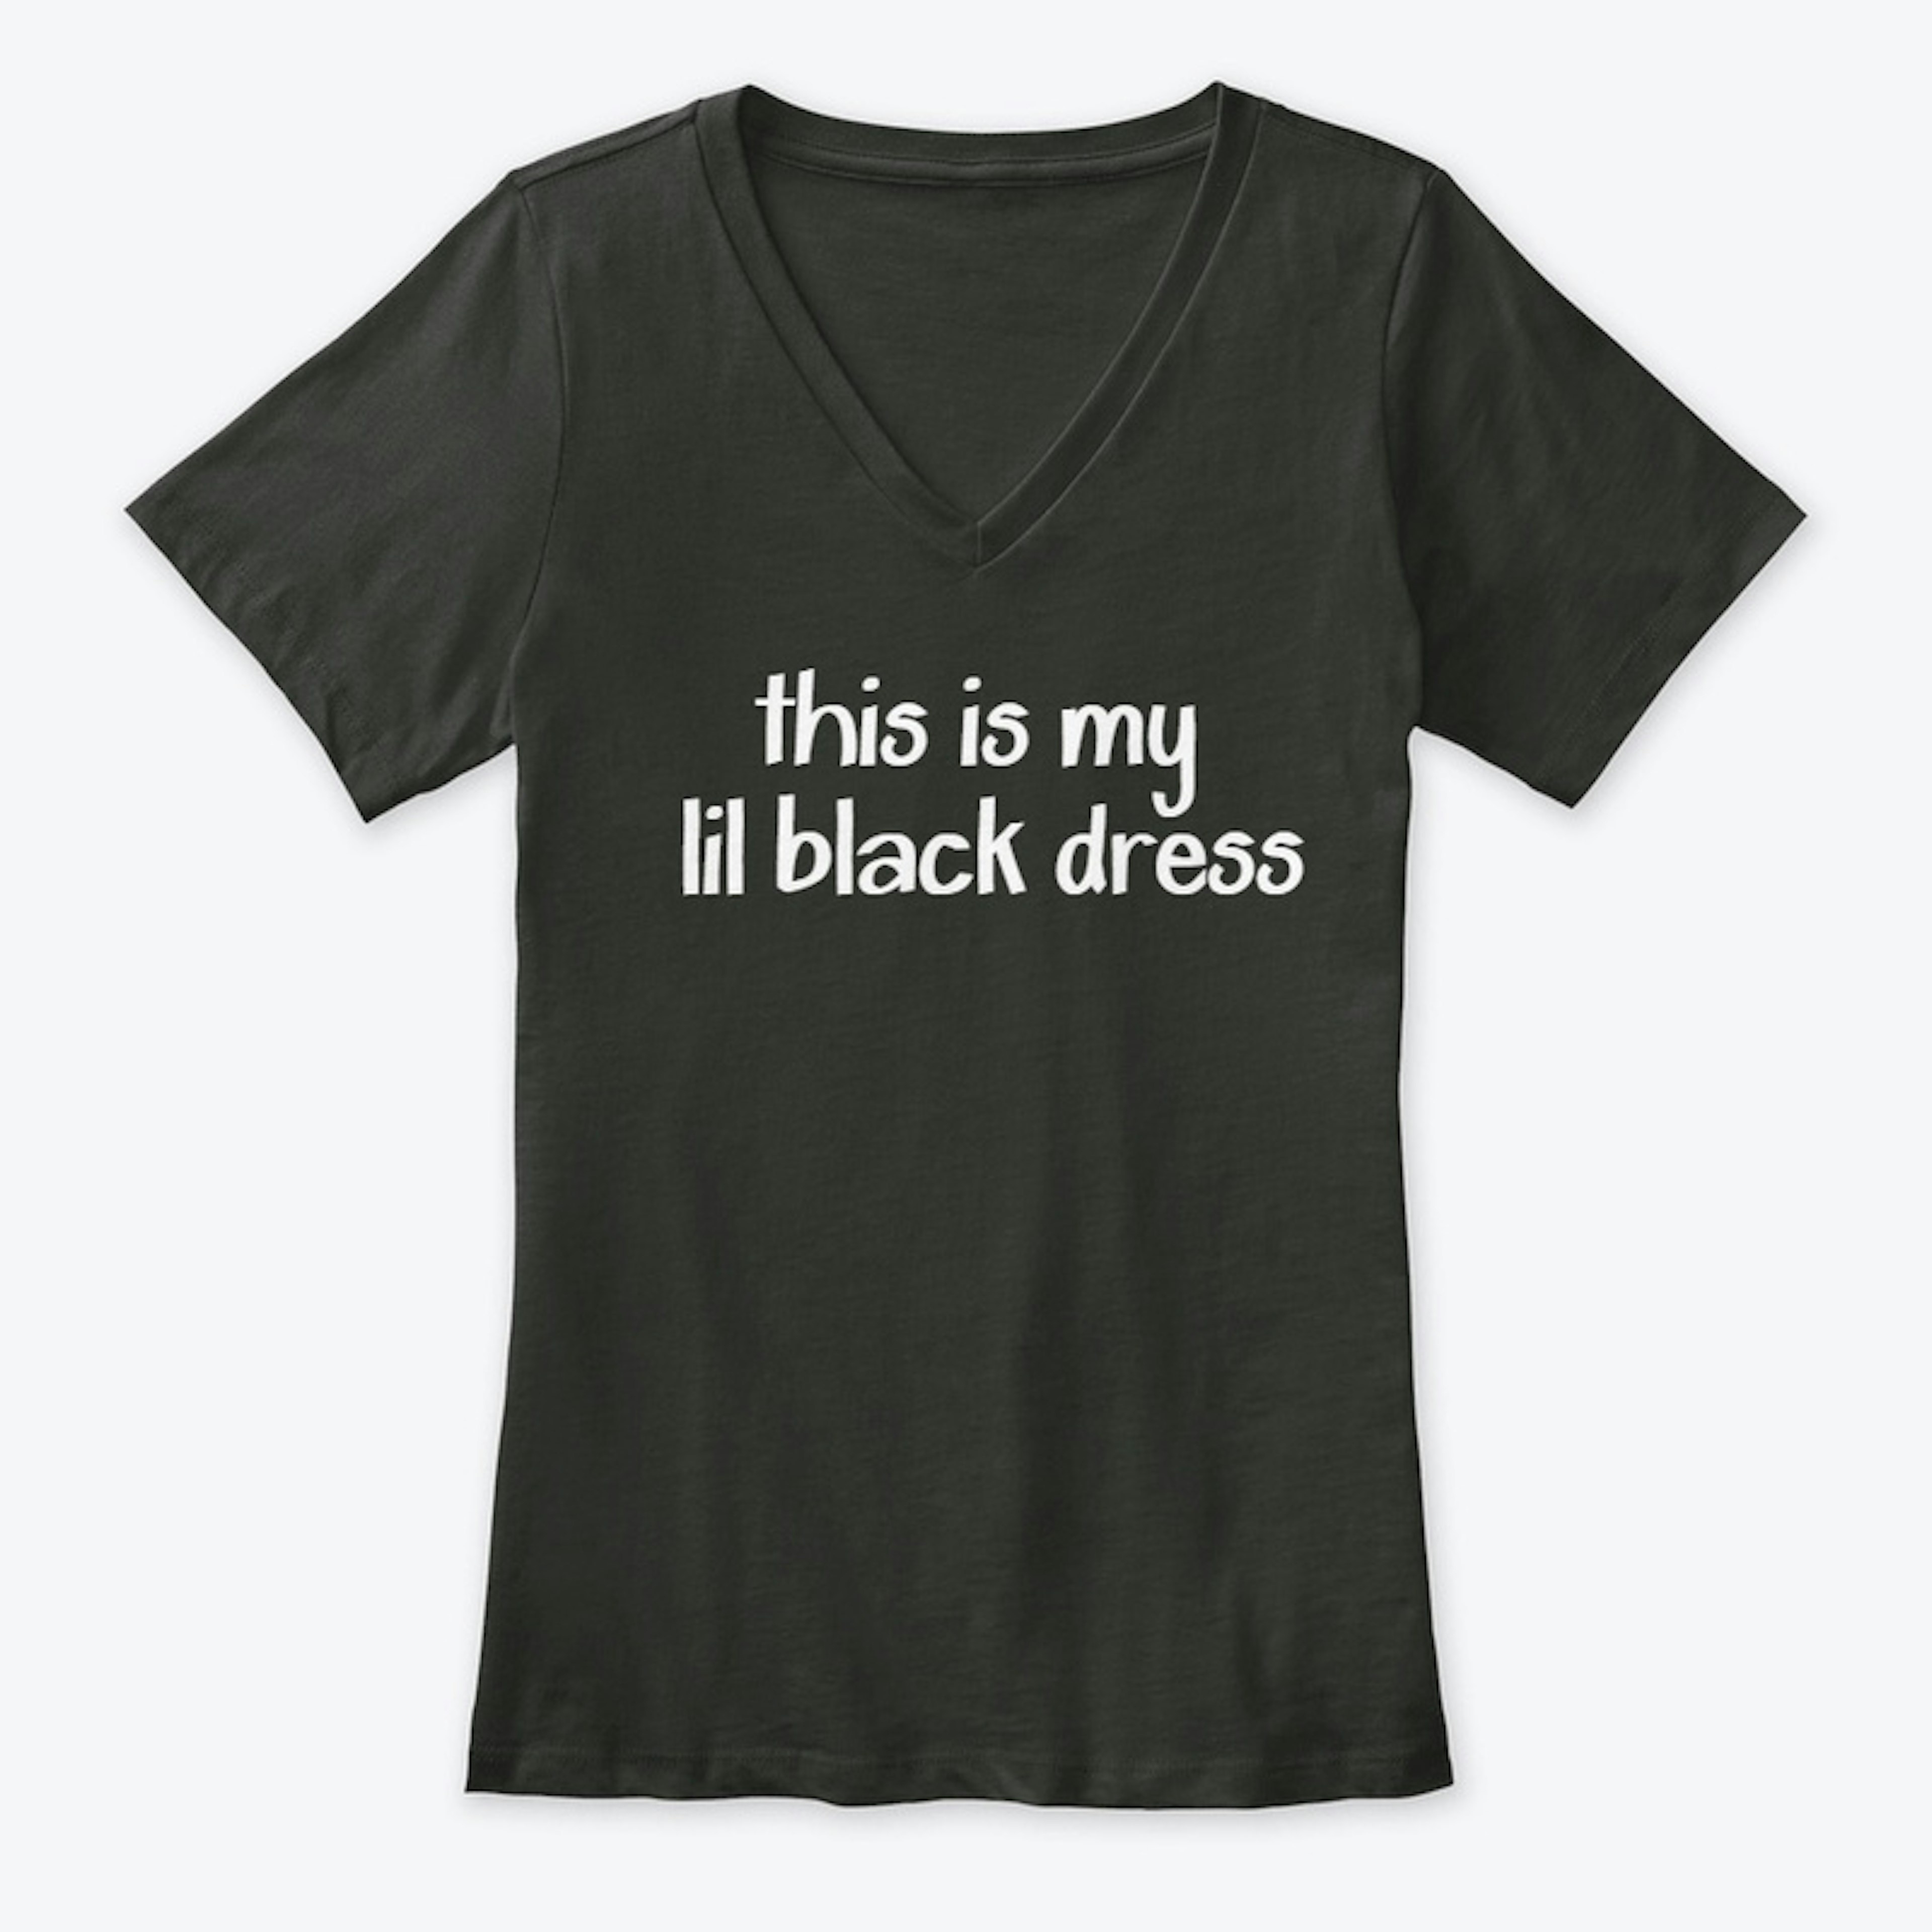 This is my lil black dress tee 